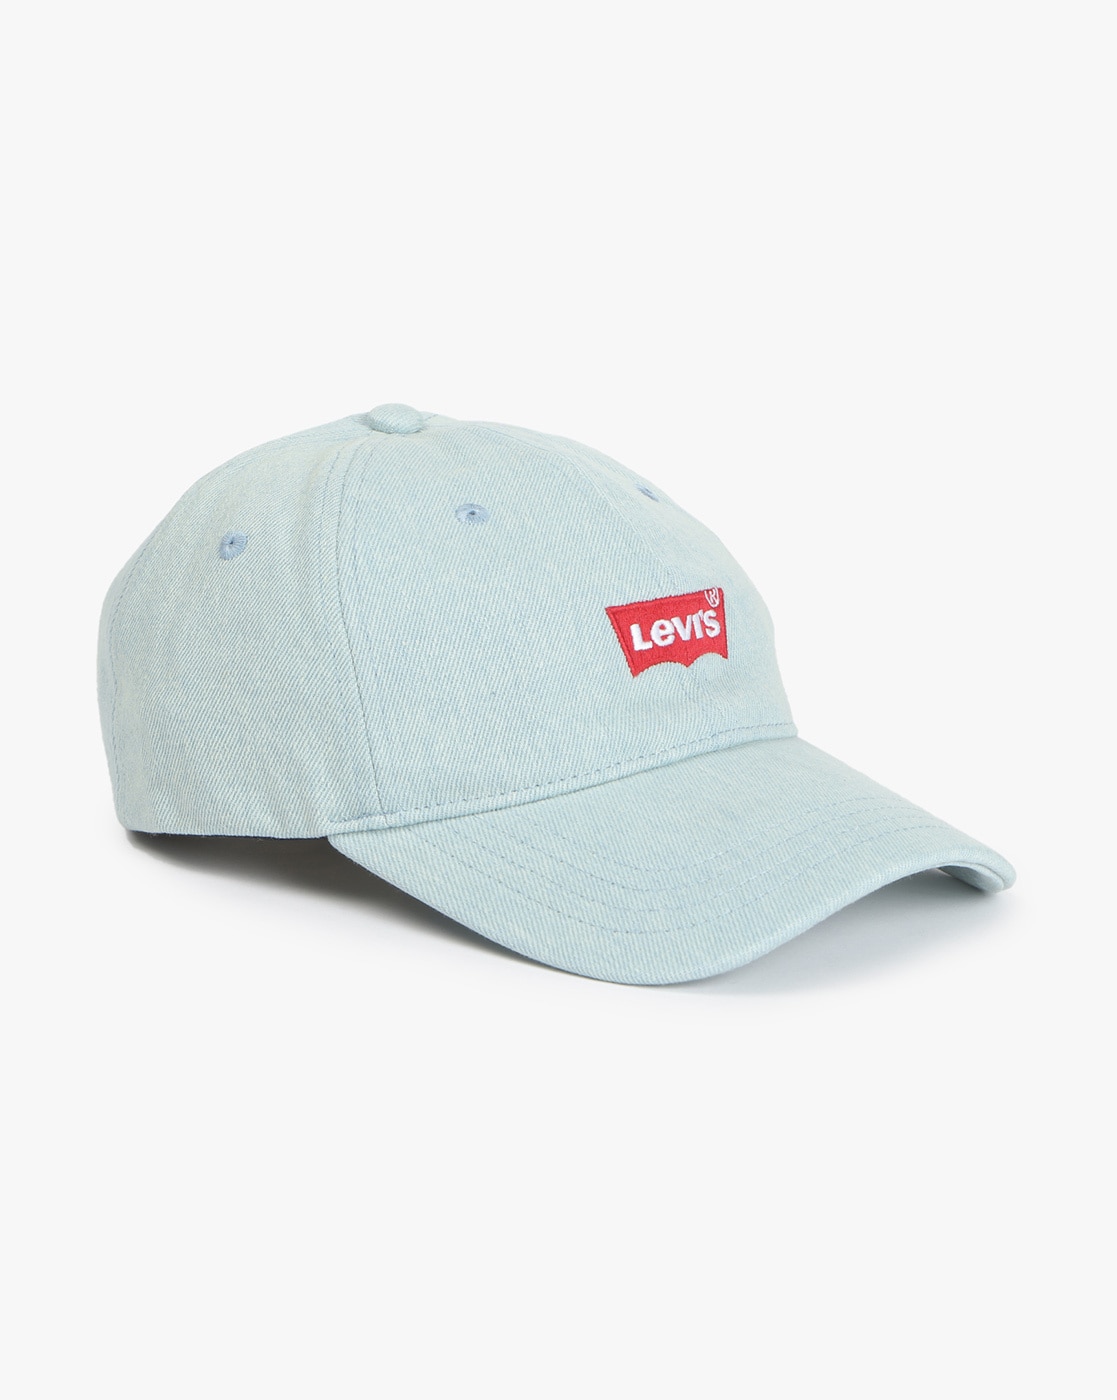 Buy Blue Caps & Hats for Men by LEVIS Online 